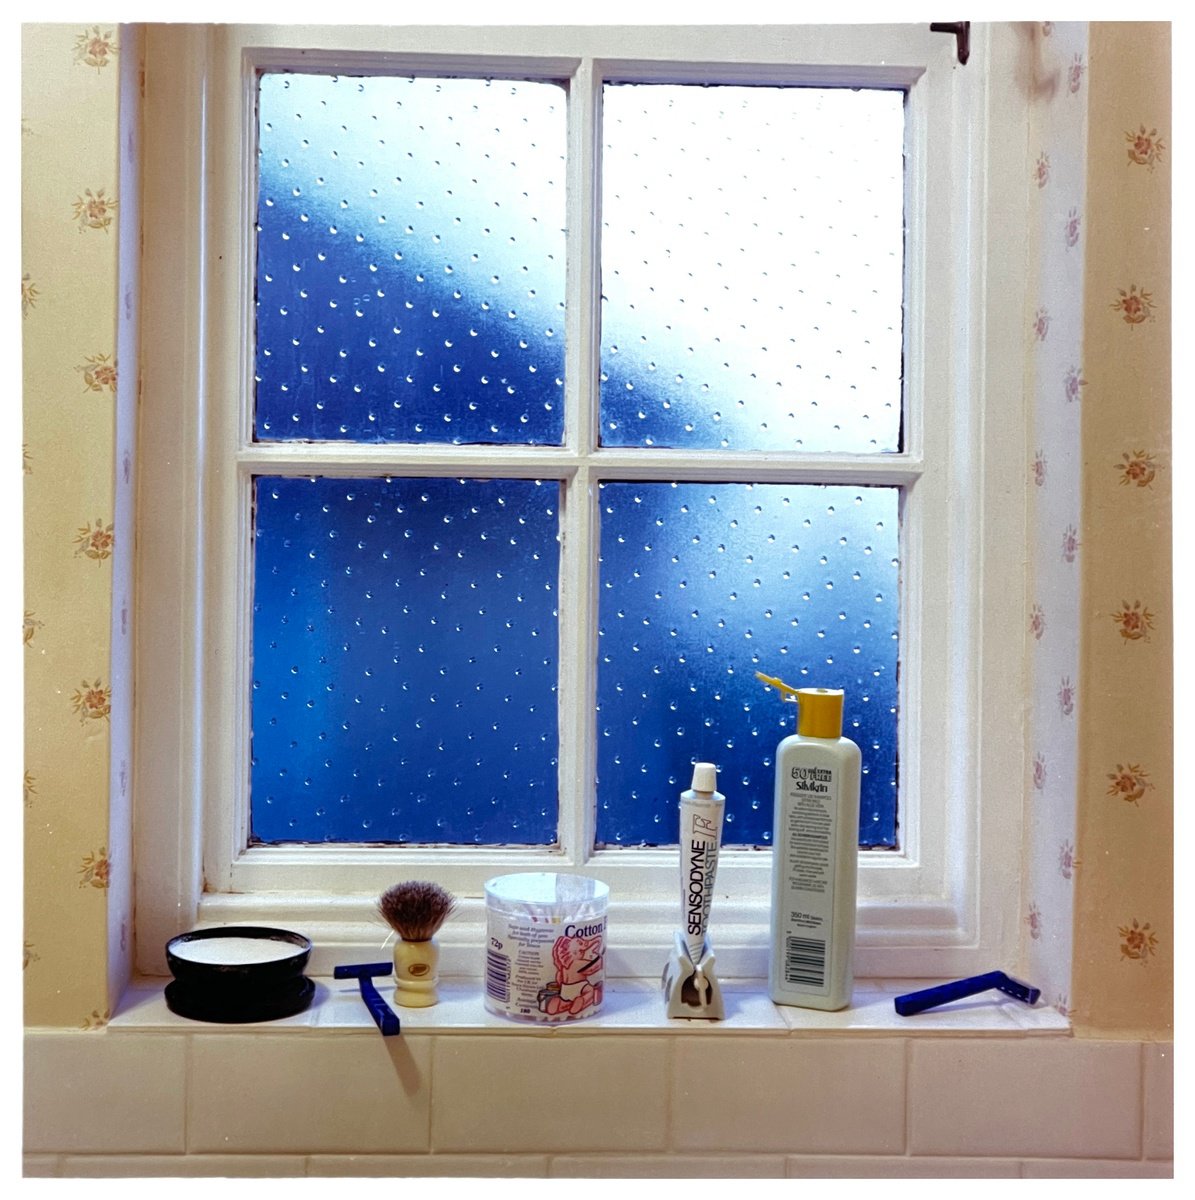 Bathroom Windowsill, Isle of Wight by Richard Heeps